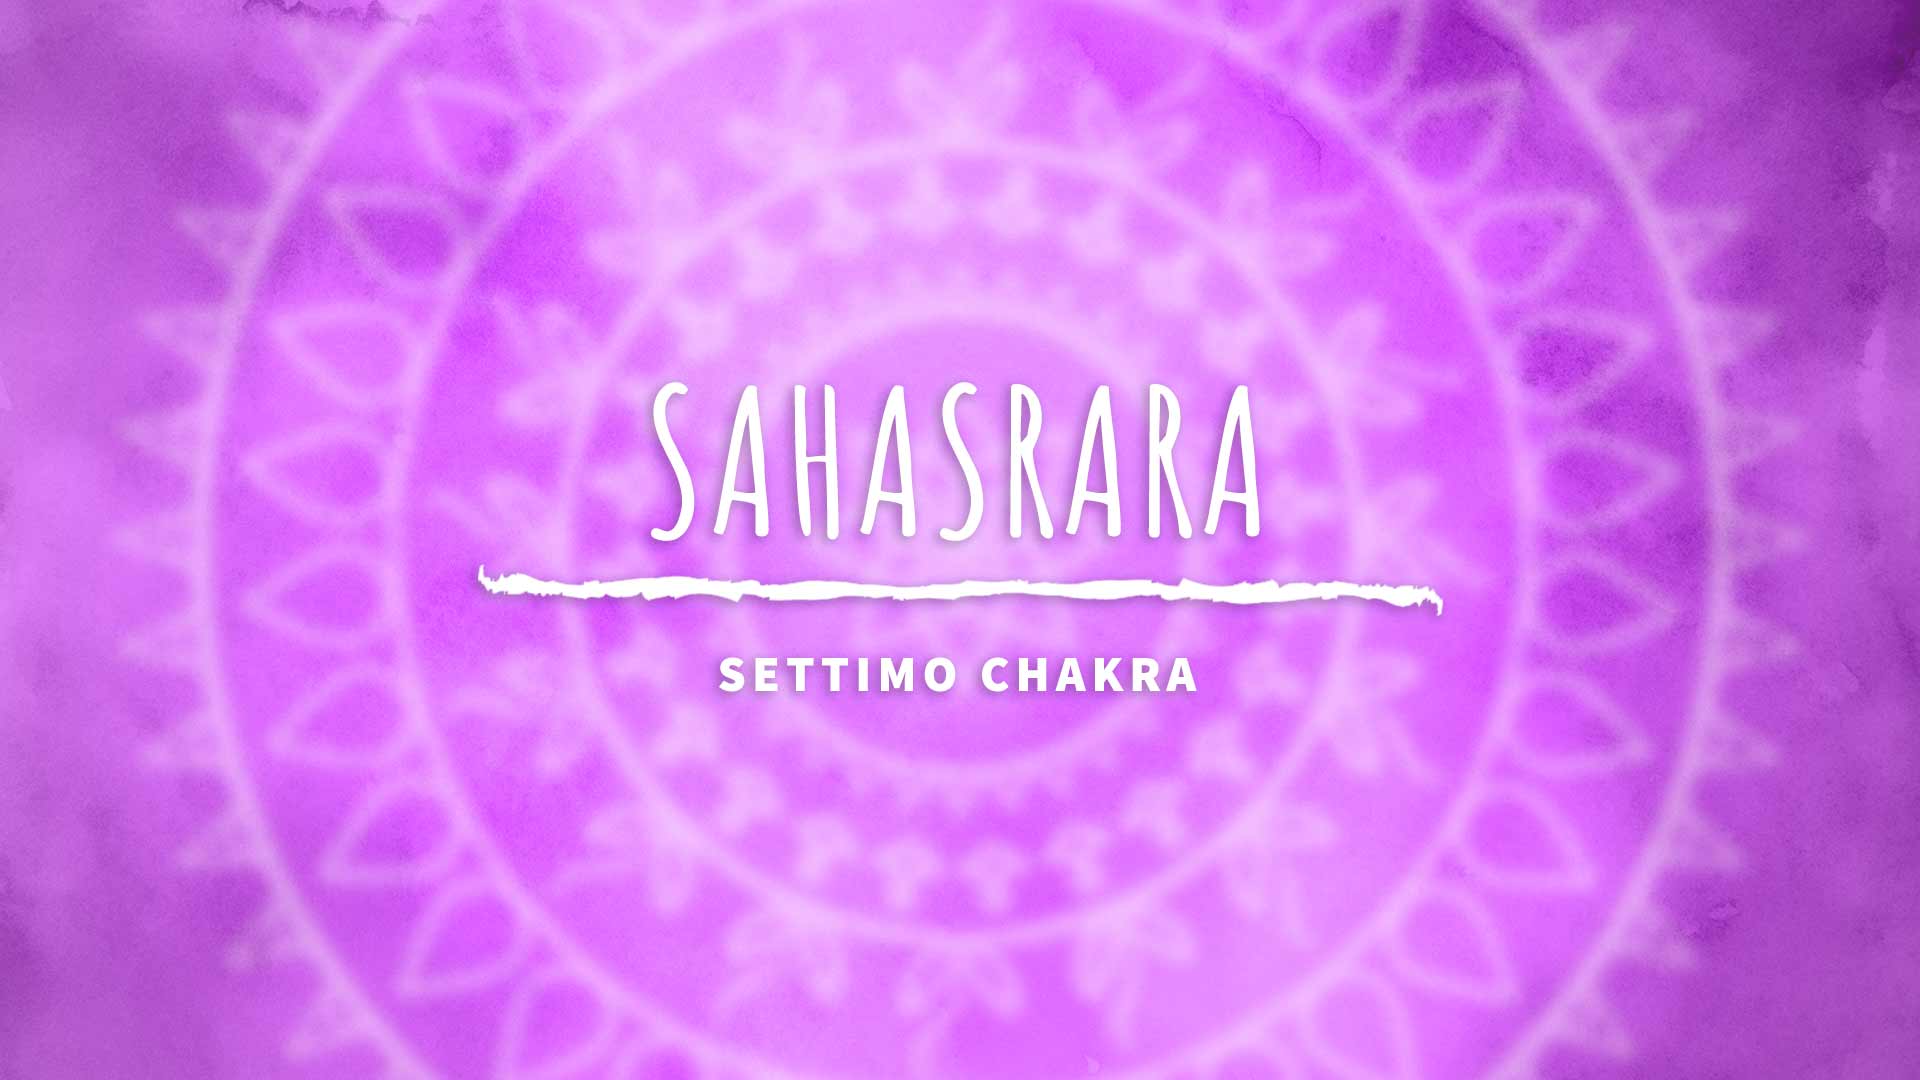 Settimo chakra Sahasrara